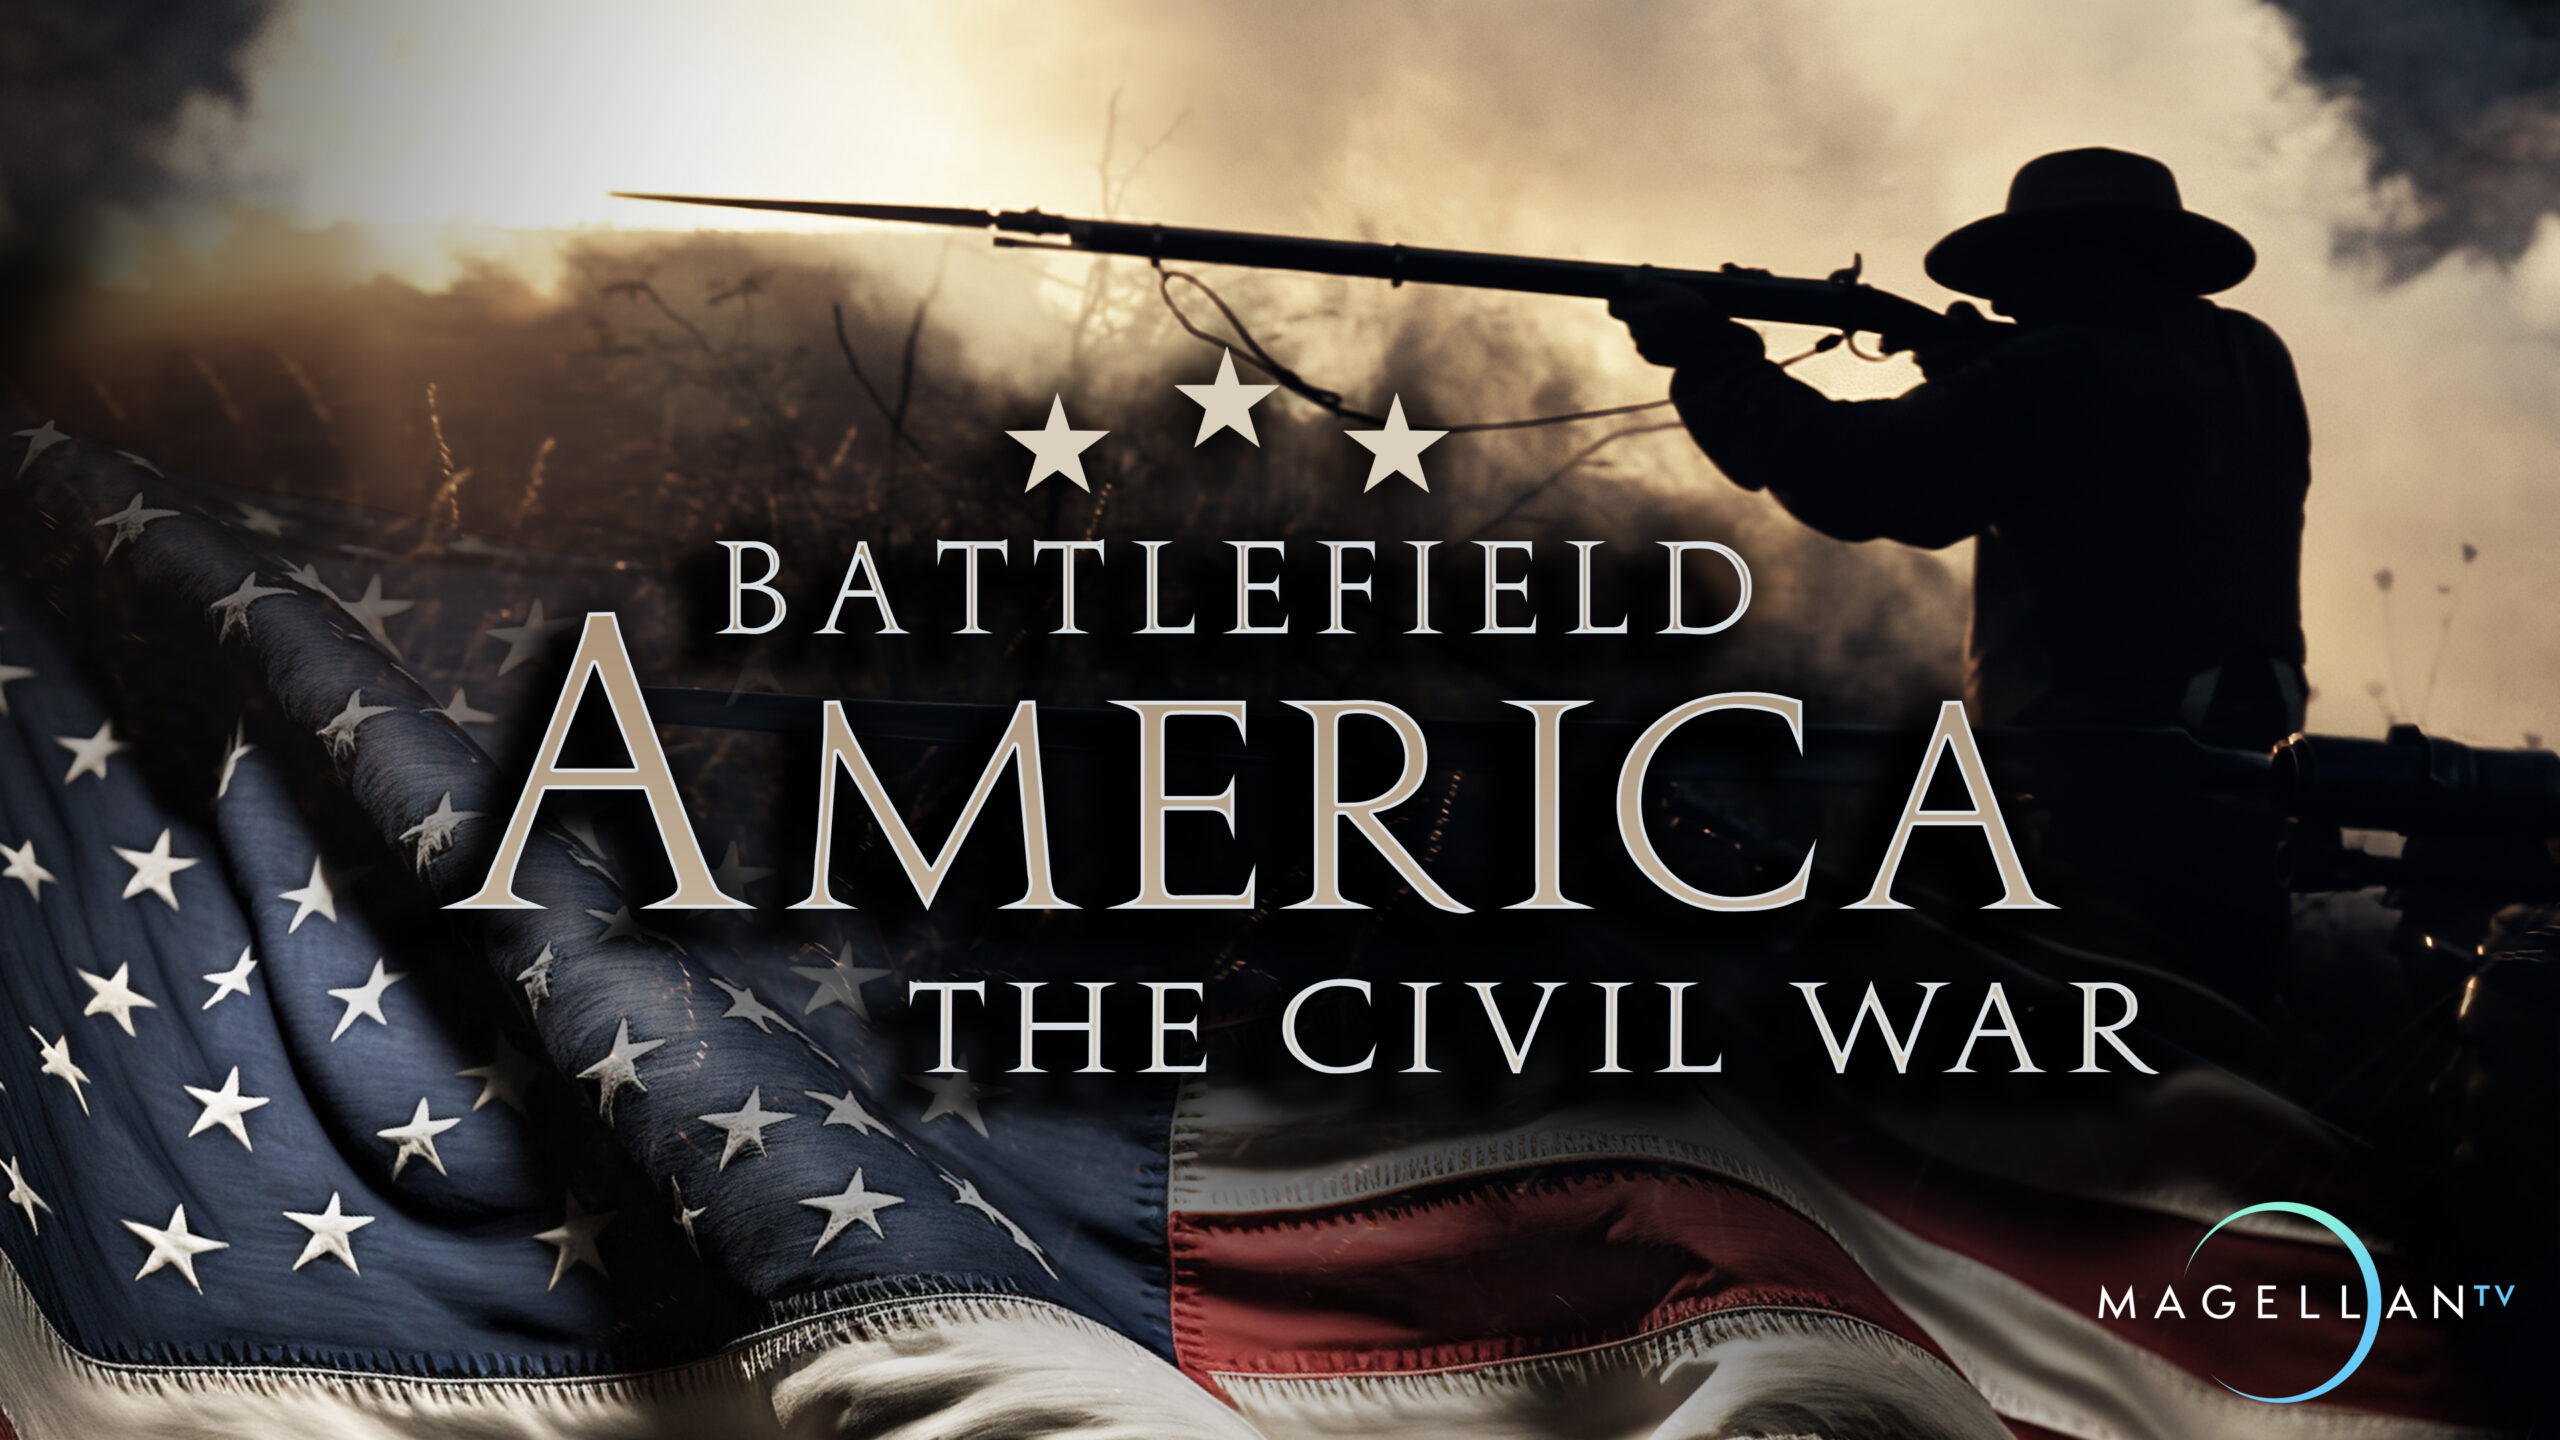 Exclusive: Battlefield America: The Civil War Debuts on MagellanTV on February 1